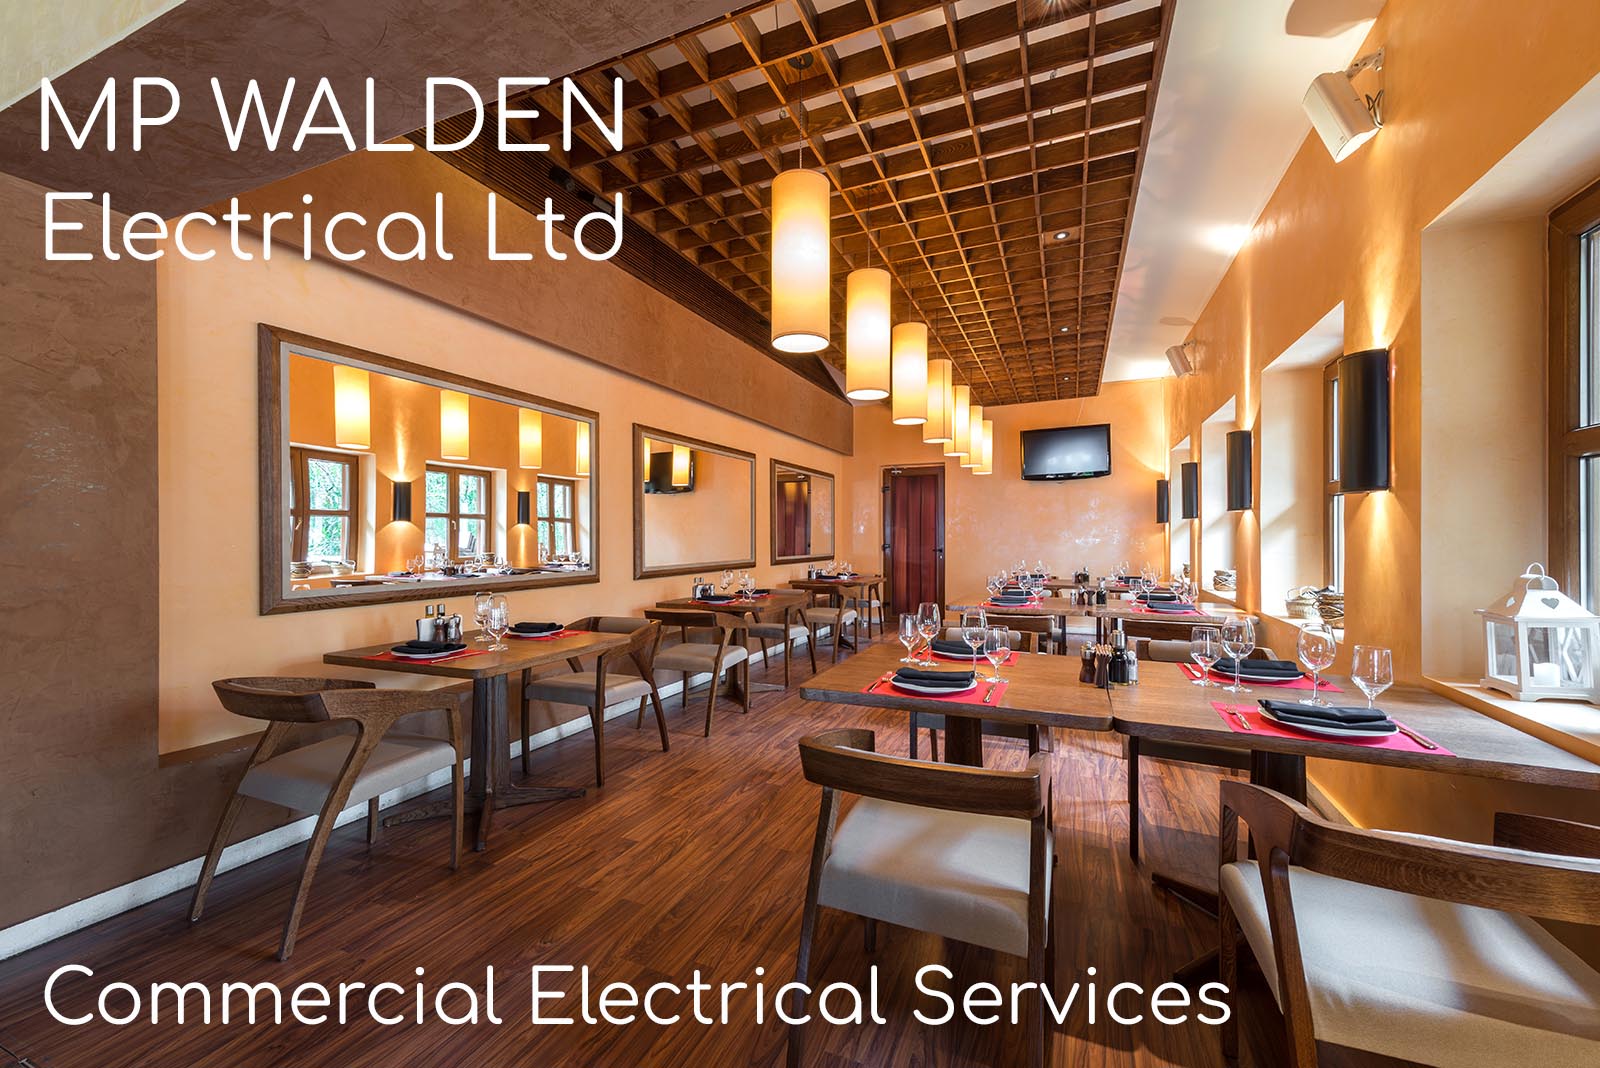 Main image for MP Walden Electrical Ltd